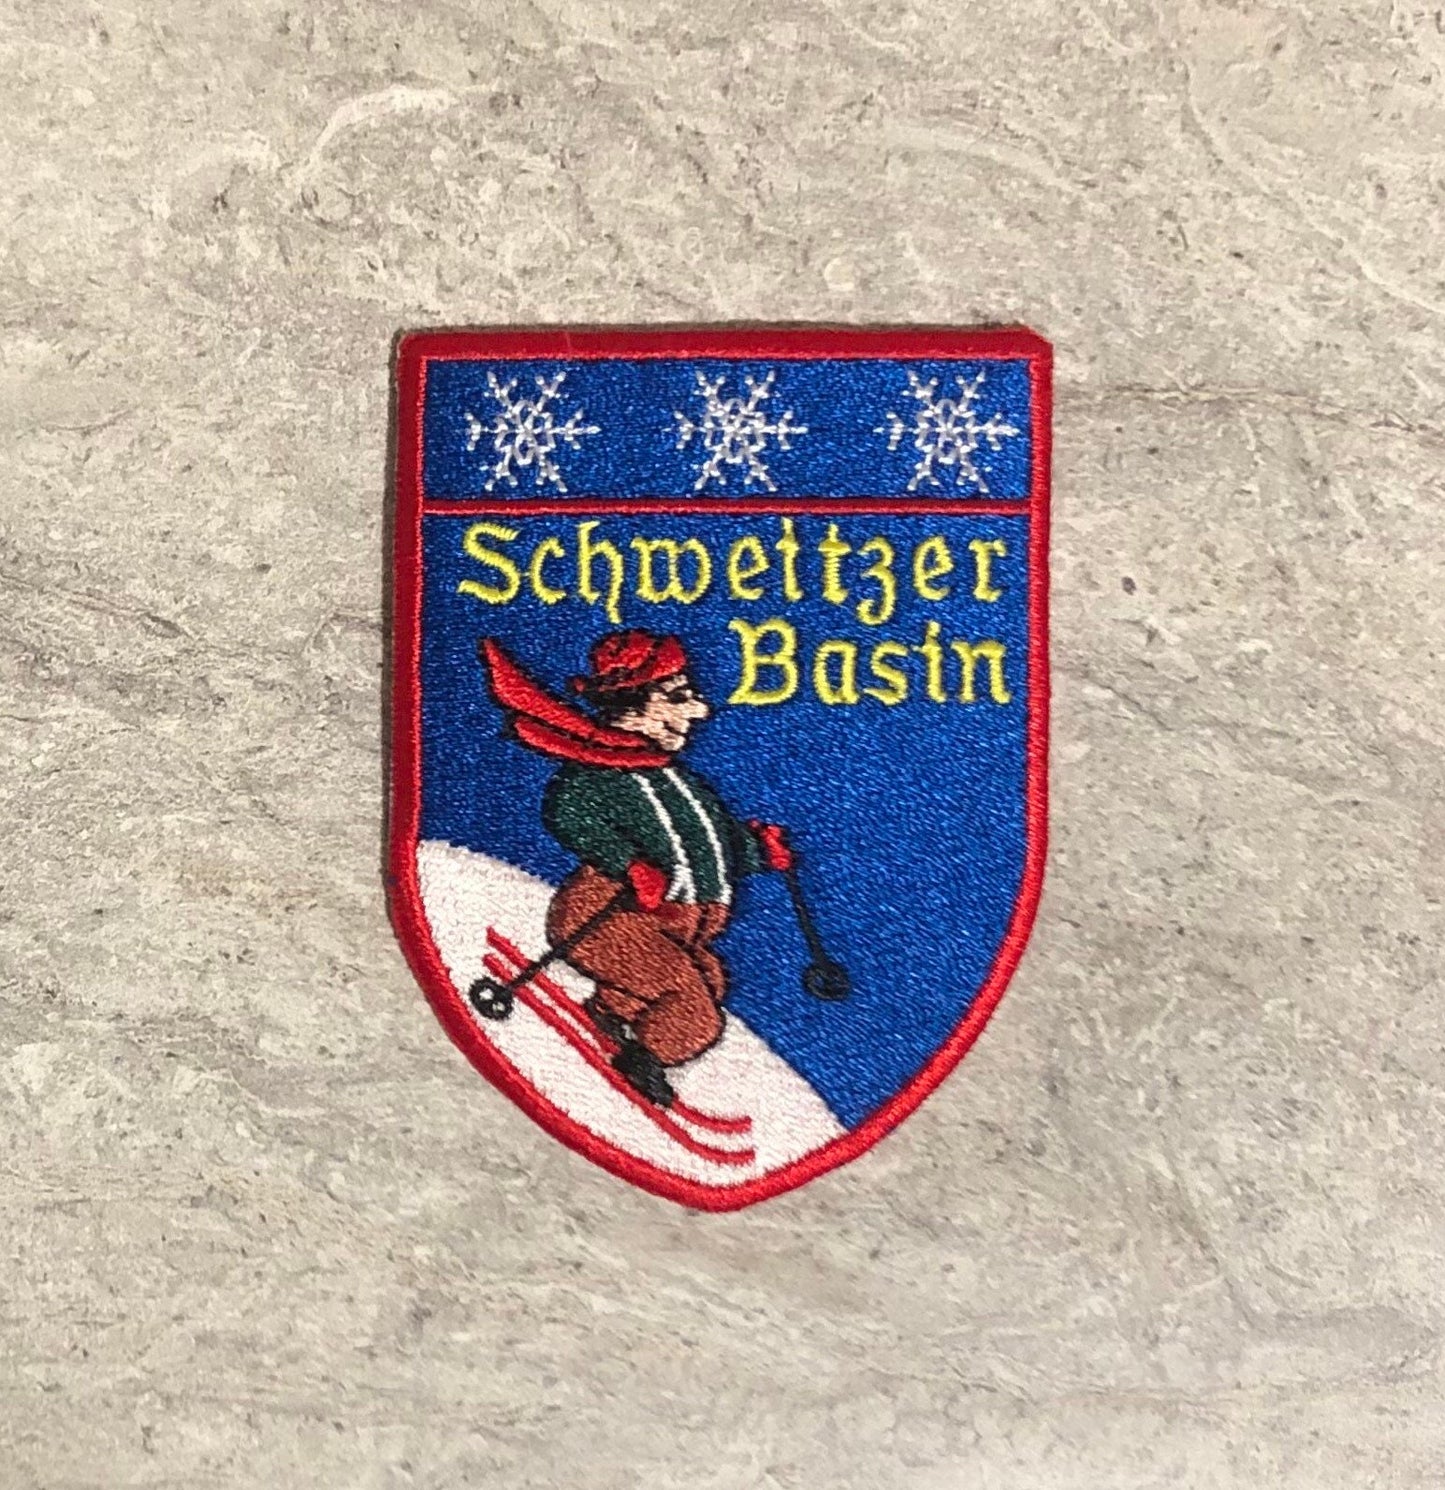 Retro Schweitzer Basin Ski Resort Patch